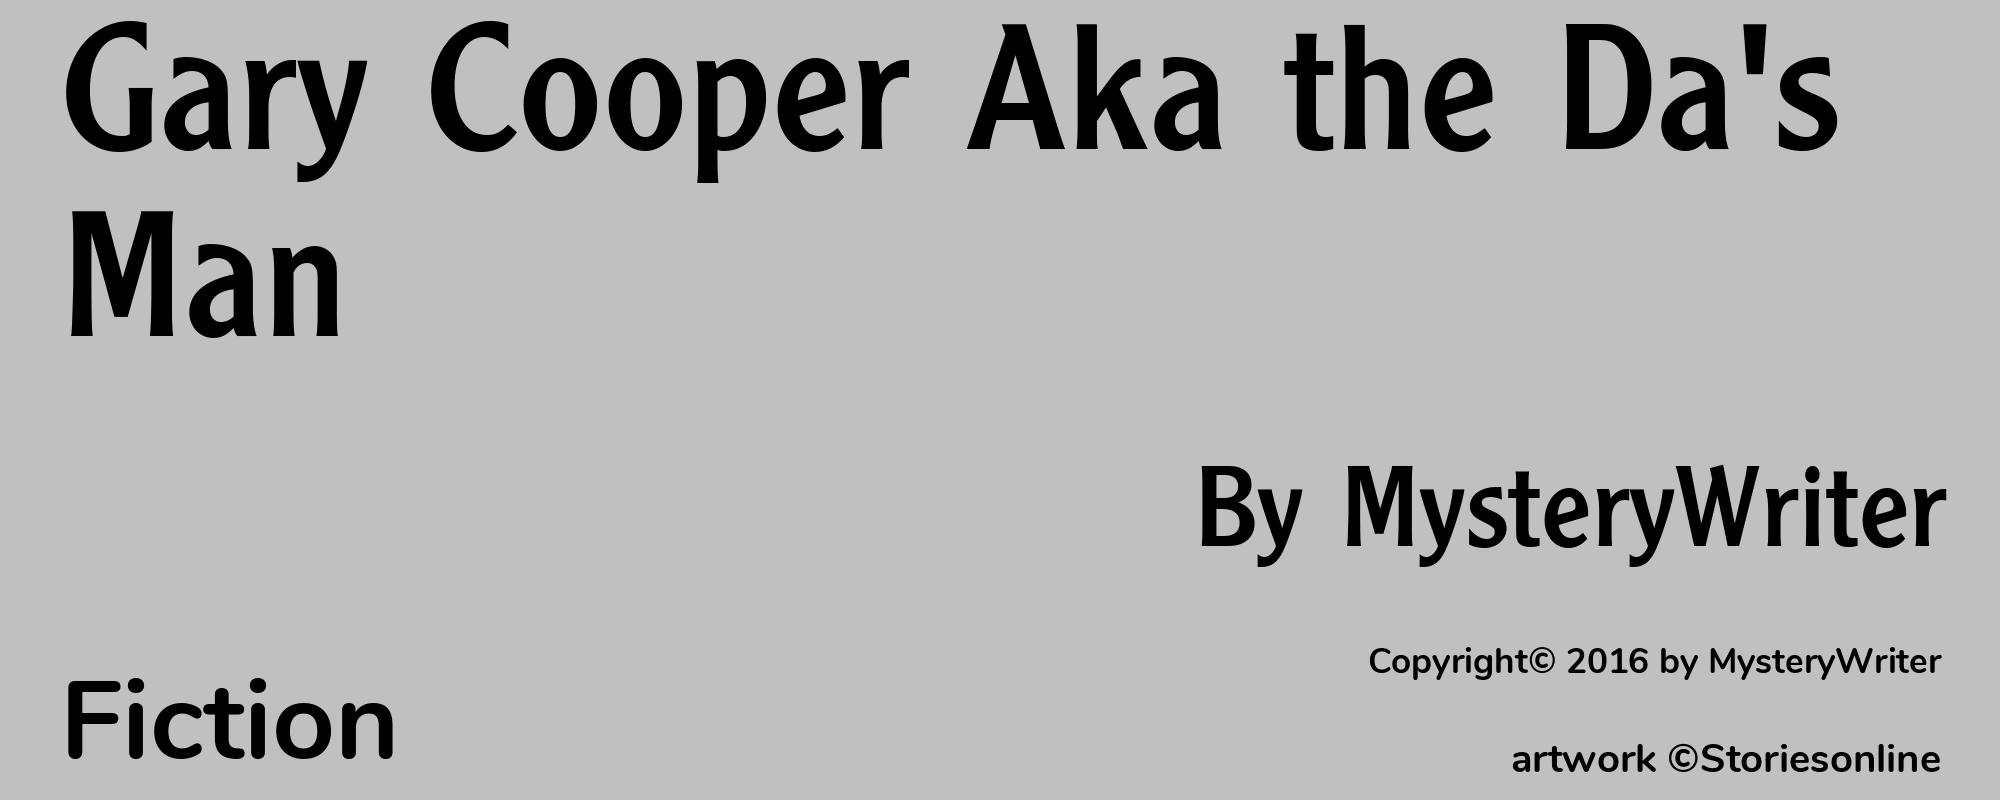 Gary Cooper Aka the Da's Man - Cover